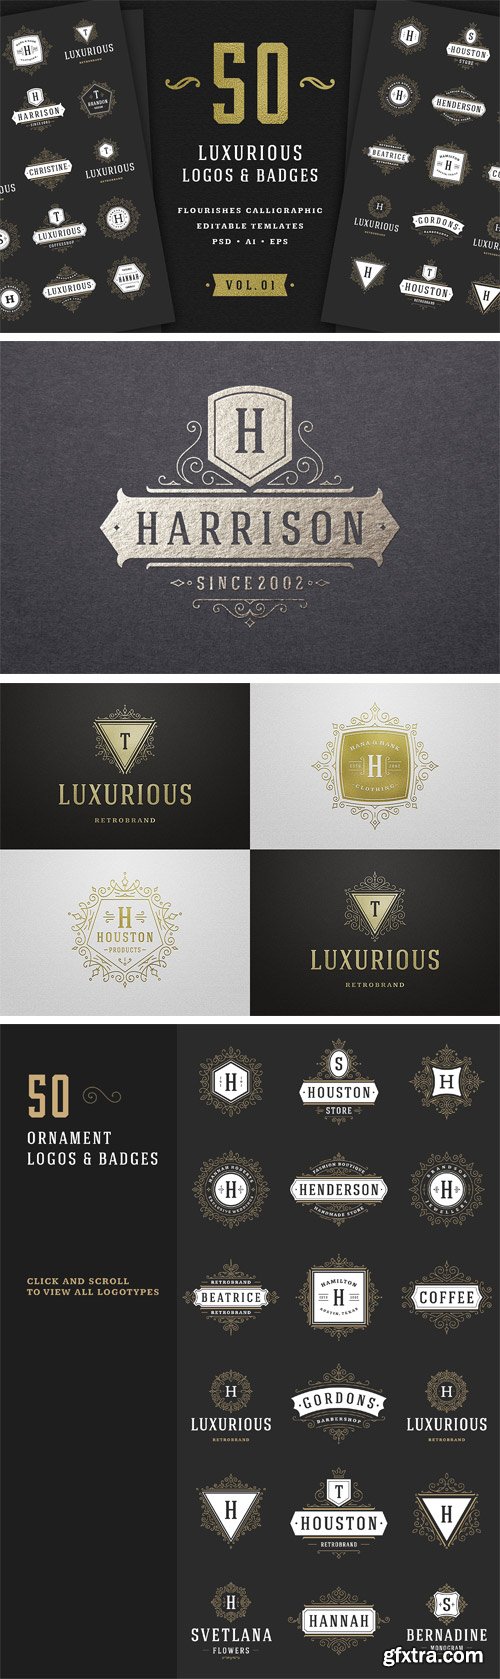 CM 1555868 - 50 Luxurious Logos & Badges